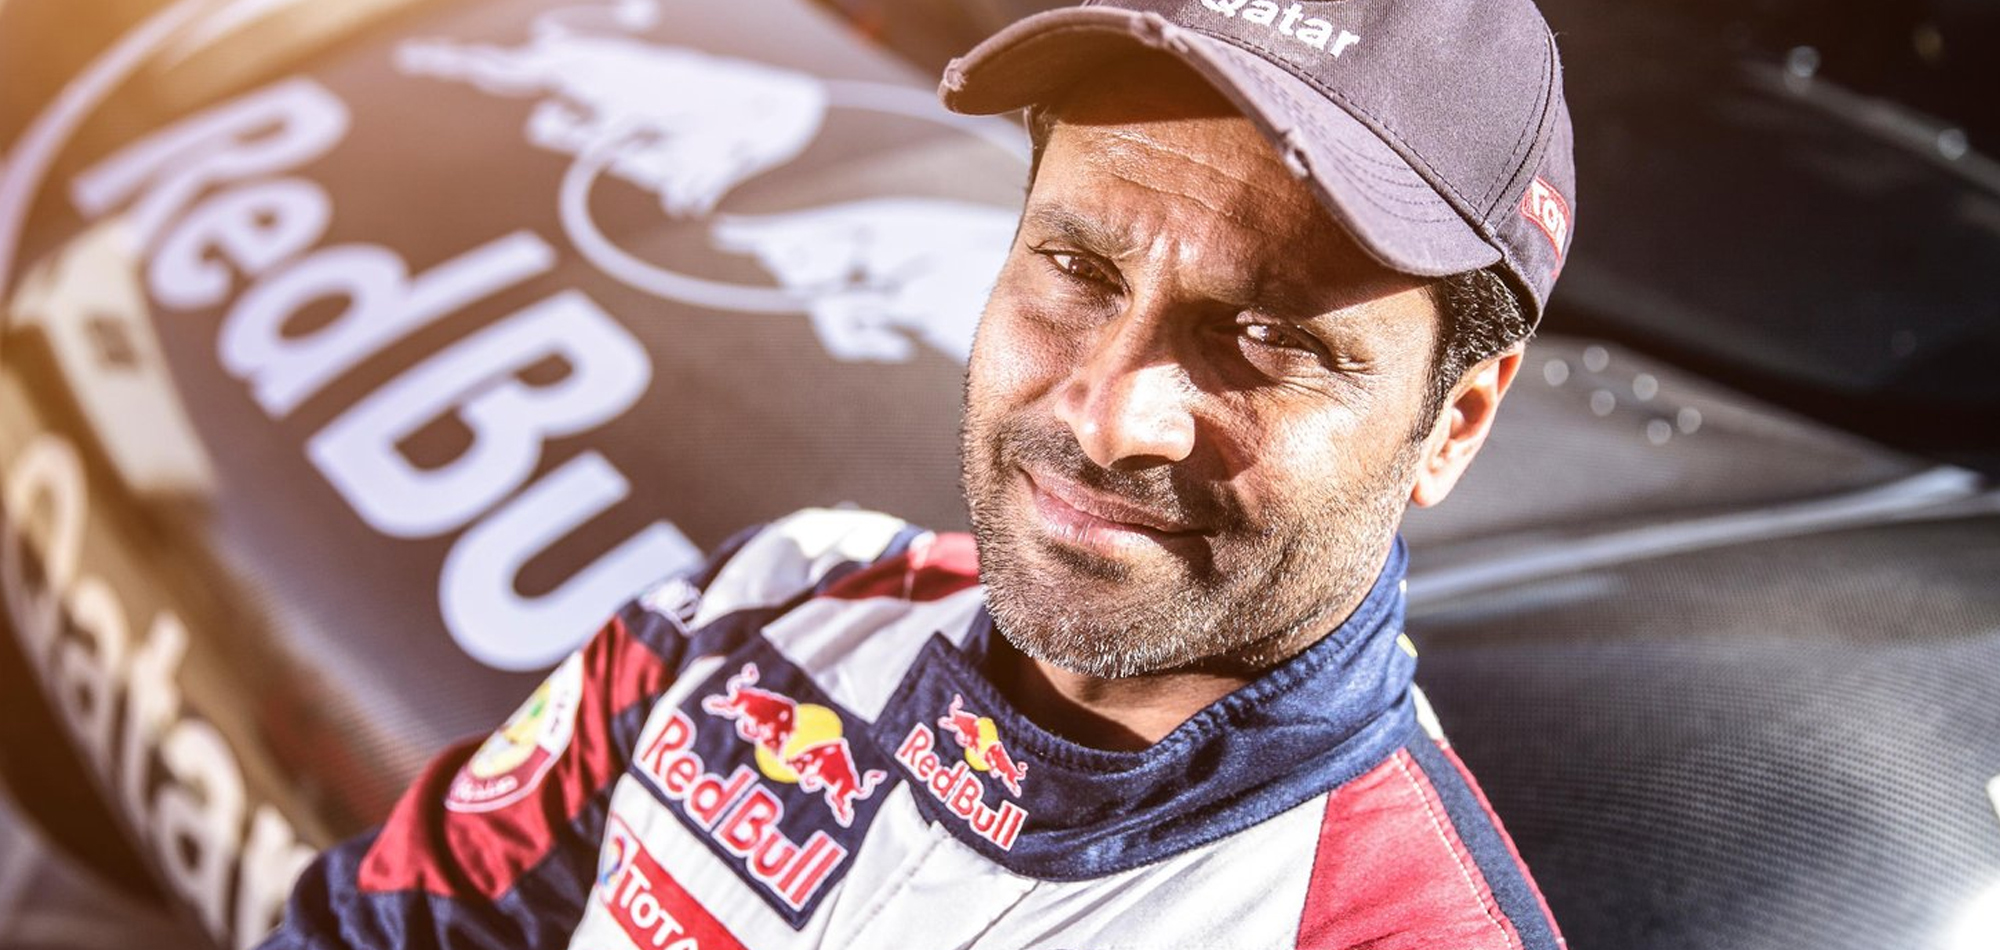 Middle-East Rally: Qatar’s Nasser Al Attiyah wins record 14th title at Jordan Rally